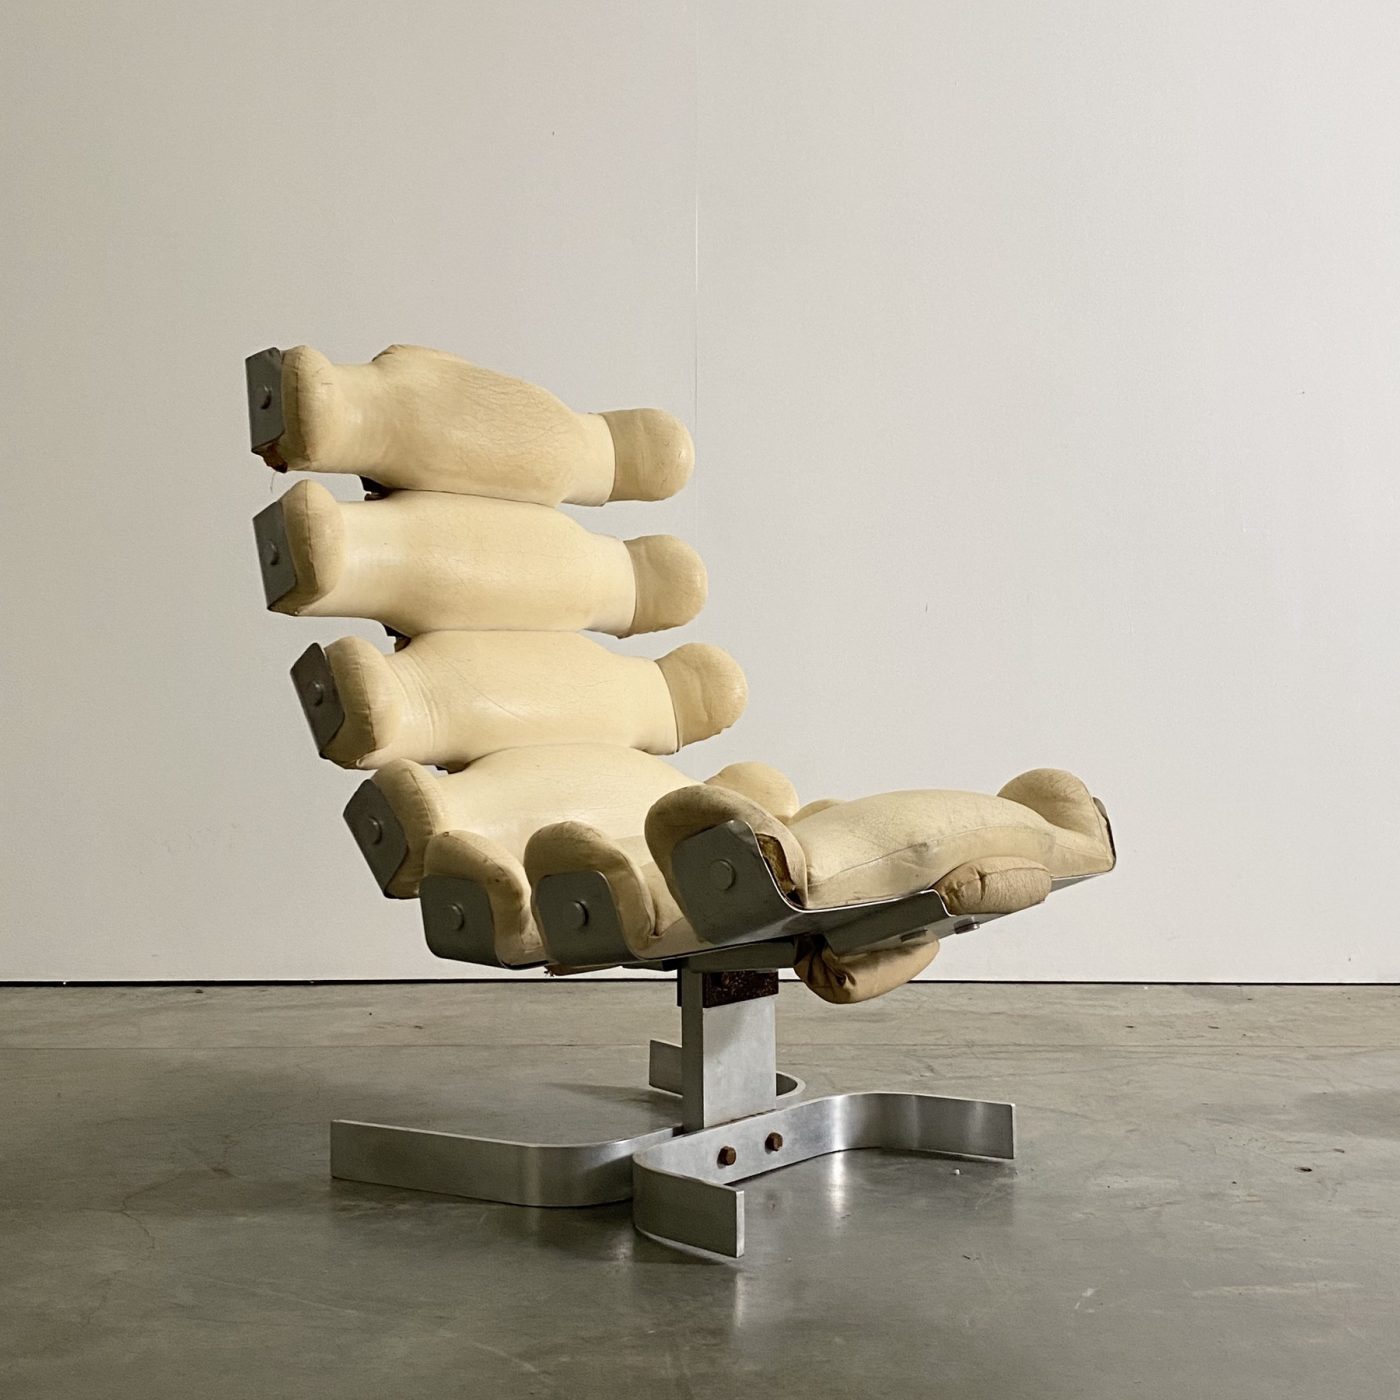 objet-vagabond-midcentury-chair0007